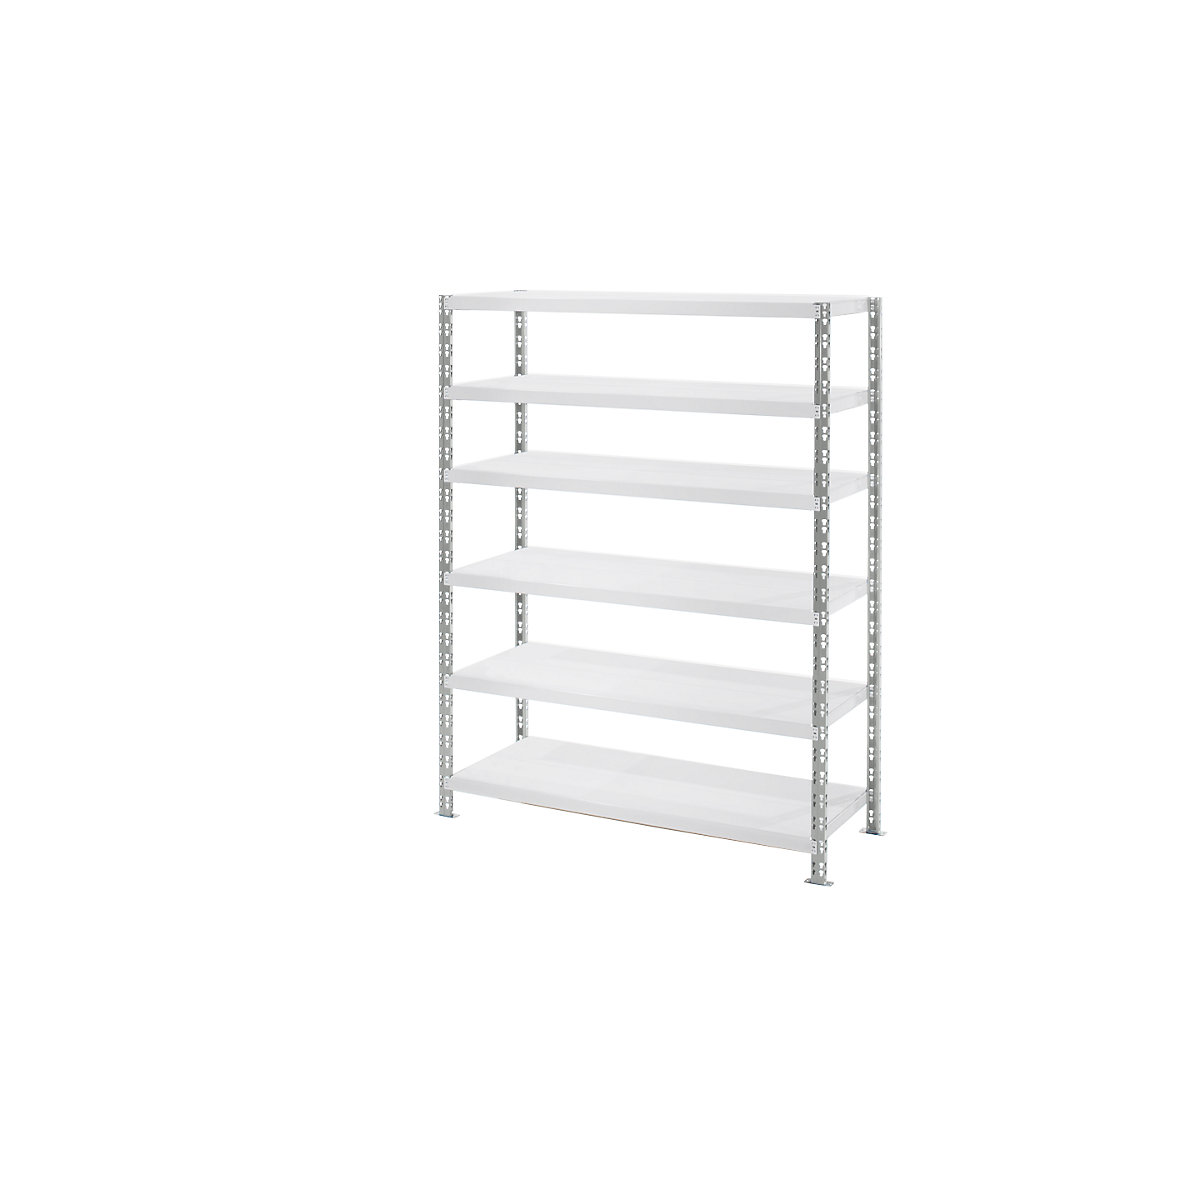 Wide span shelf unit with sheet steel shelves, depth 600 mm, standard shelf unit, HxW 1976 x 1550 mm